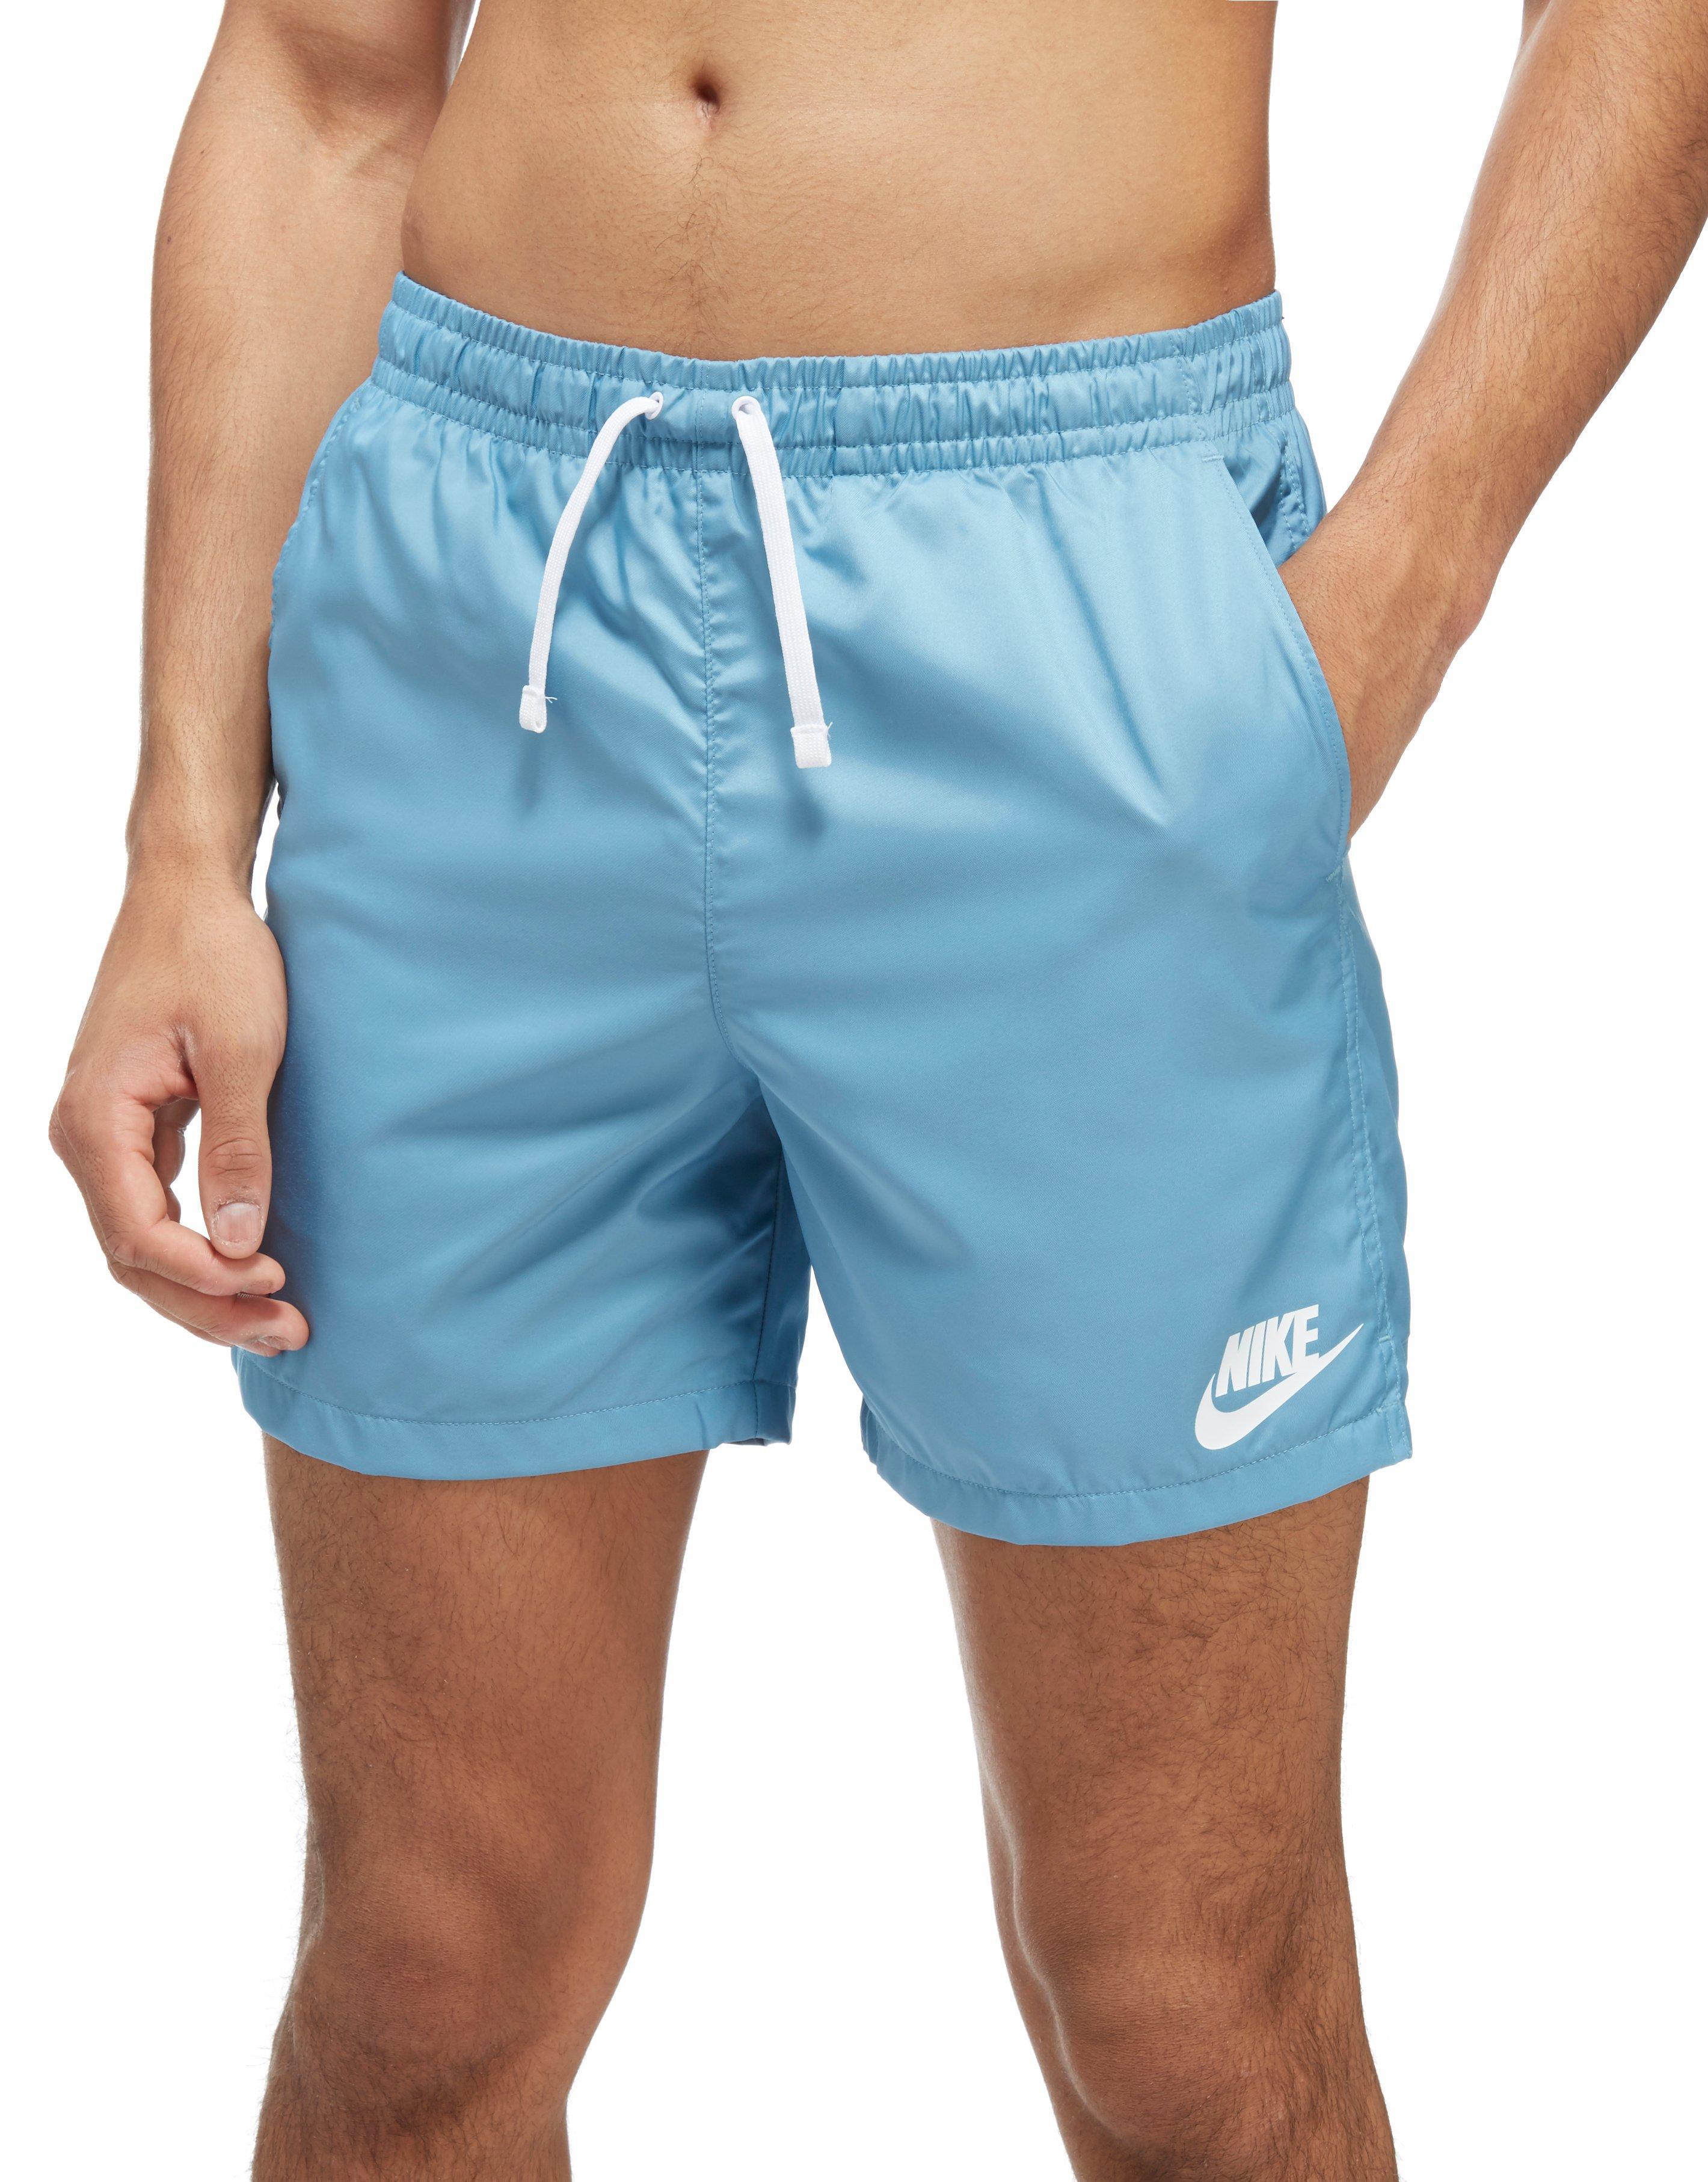 nike flow logo swim shorts